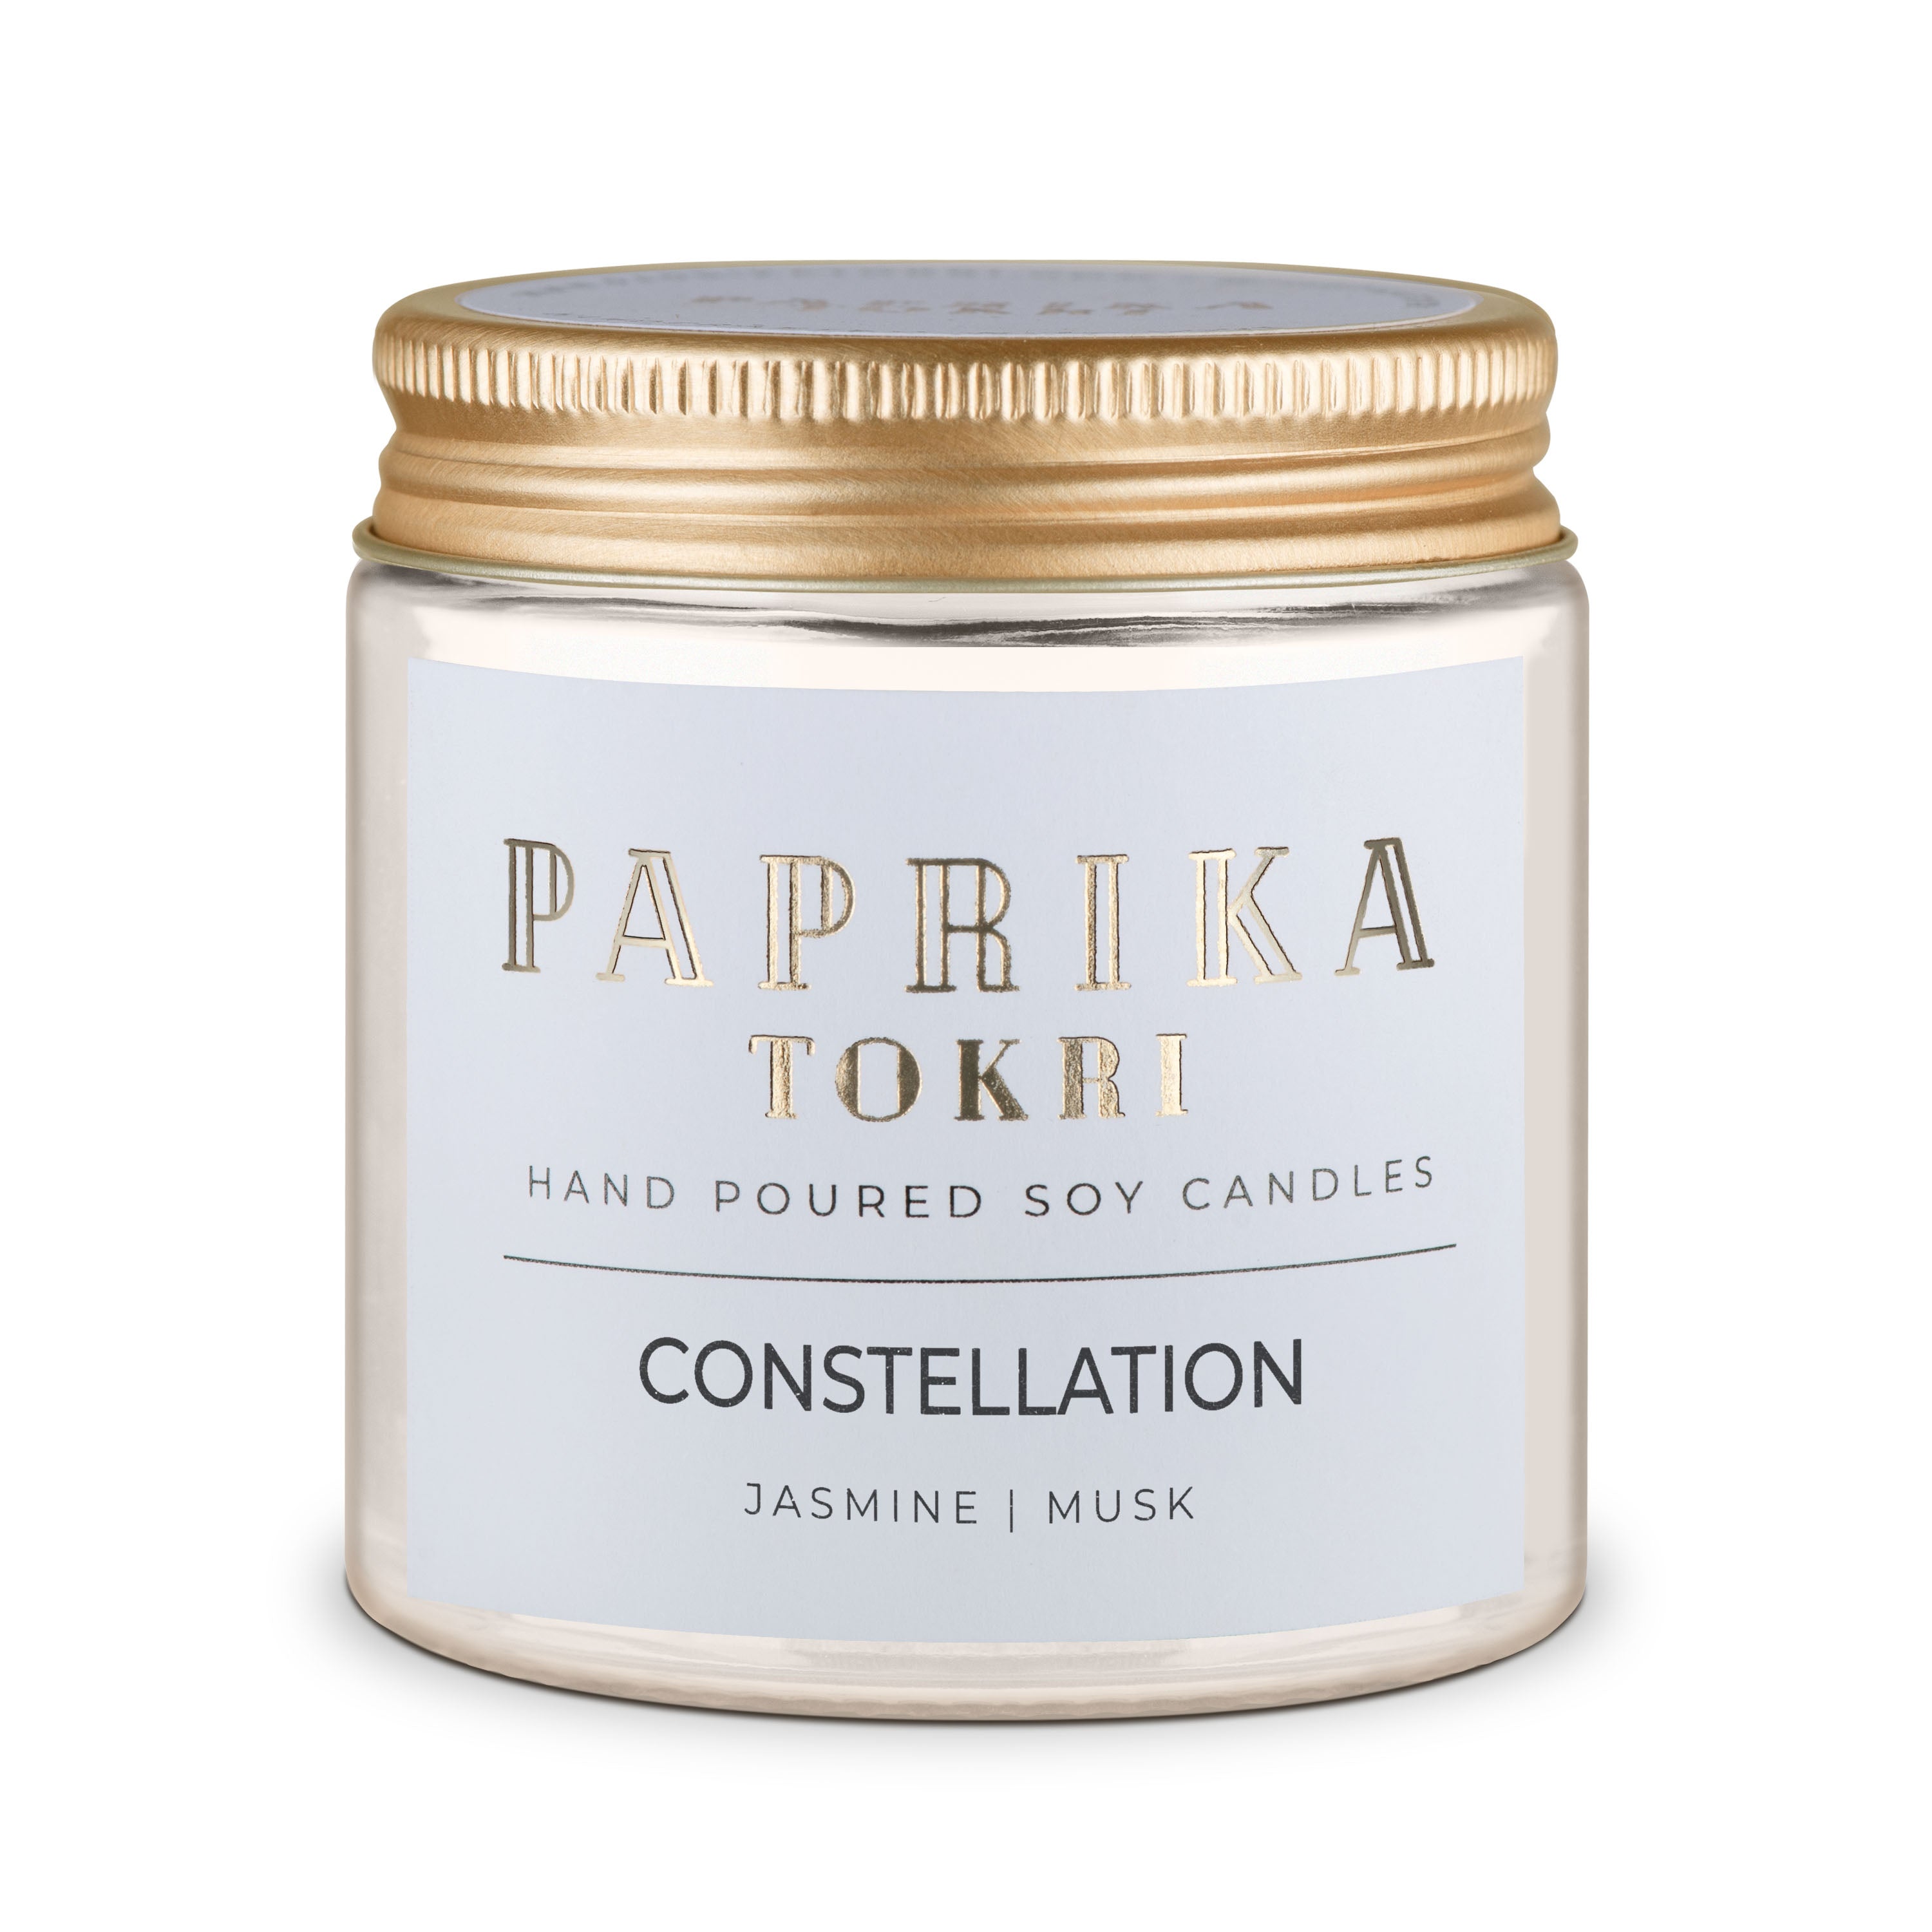 CONSTELLATION - The Essential Jar